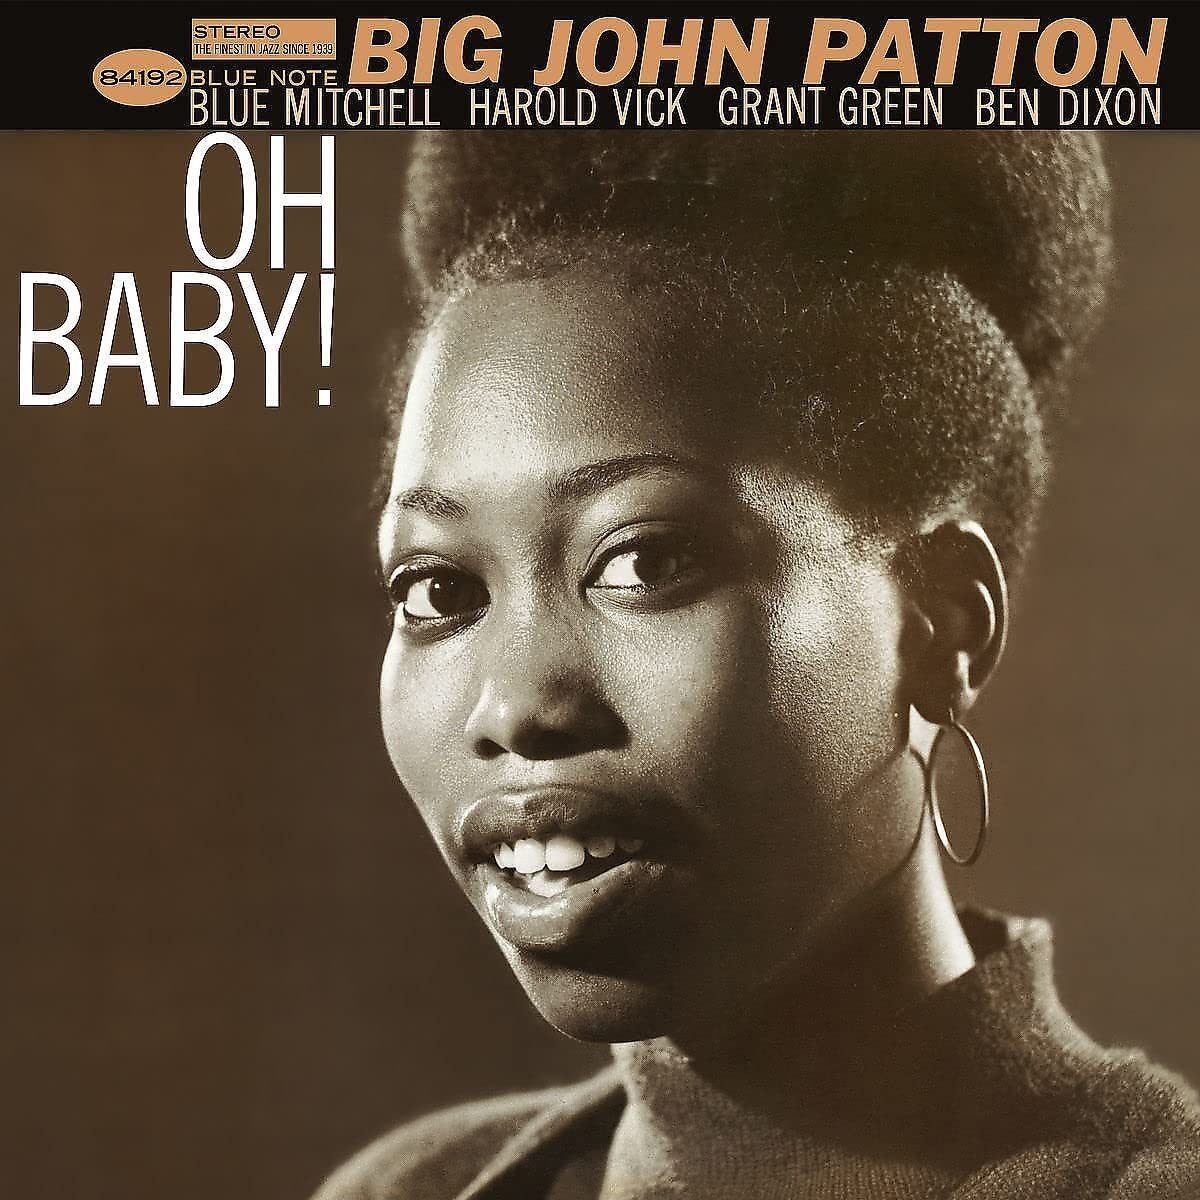 BIG JOHN PATTON – OH BABY! ON